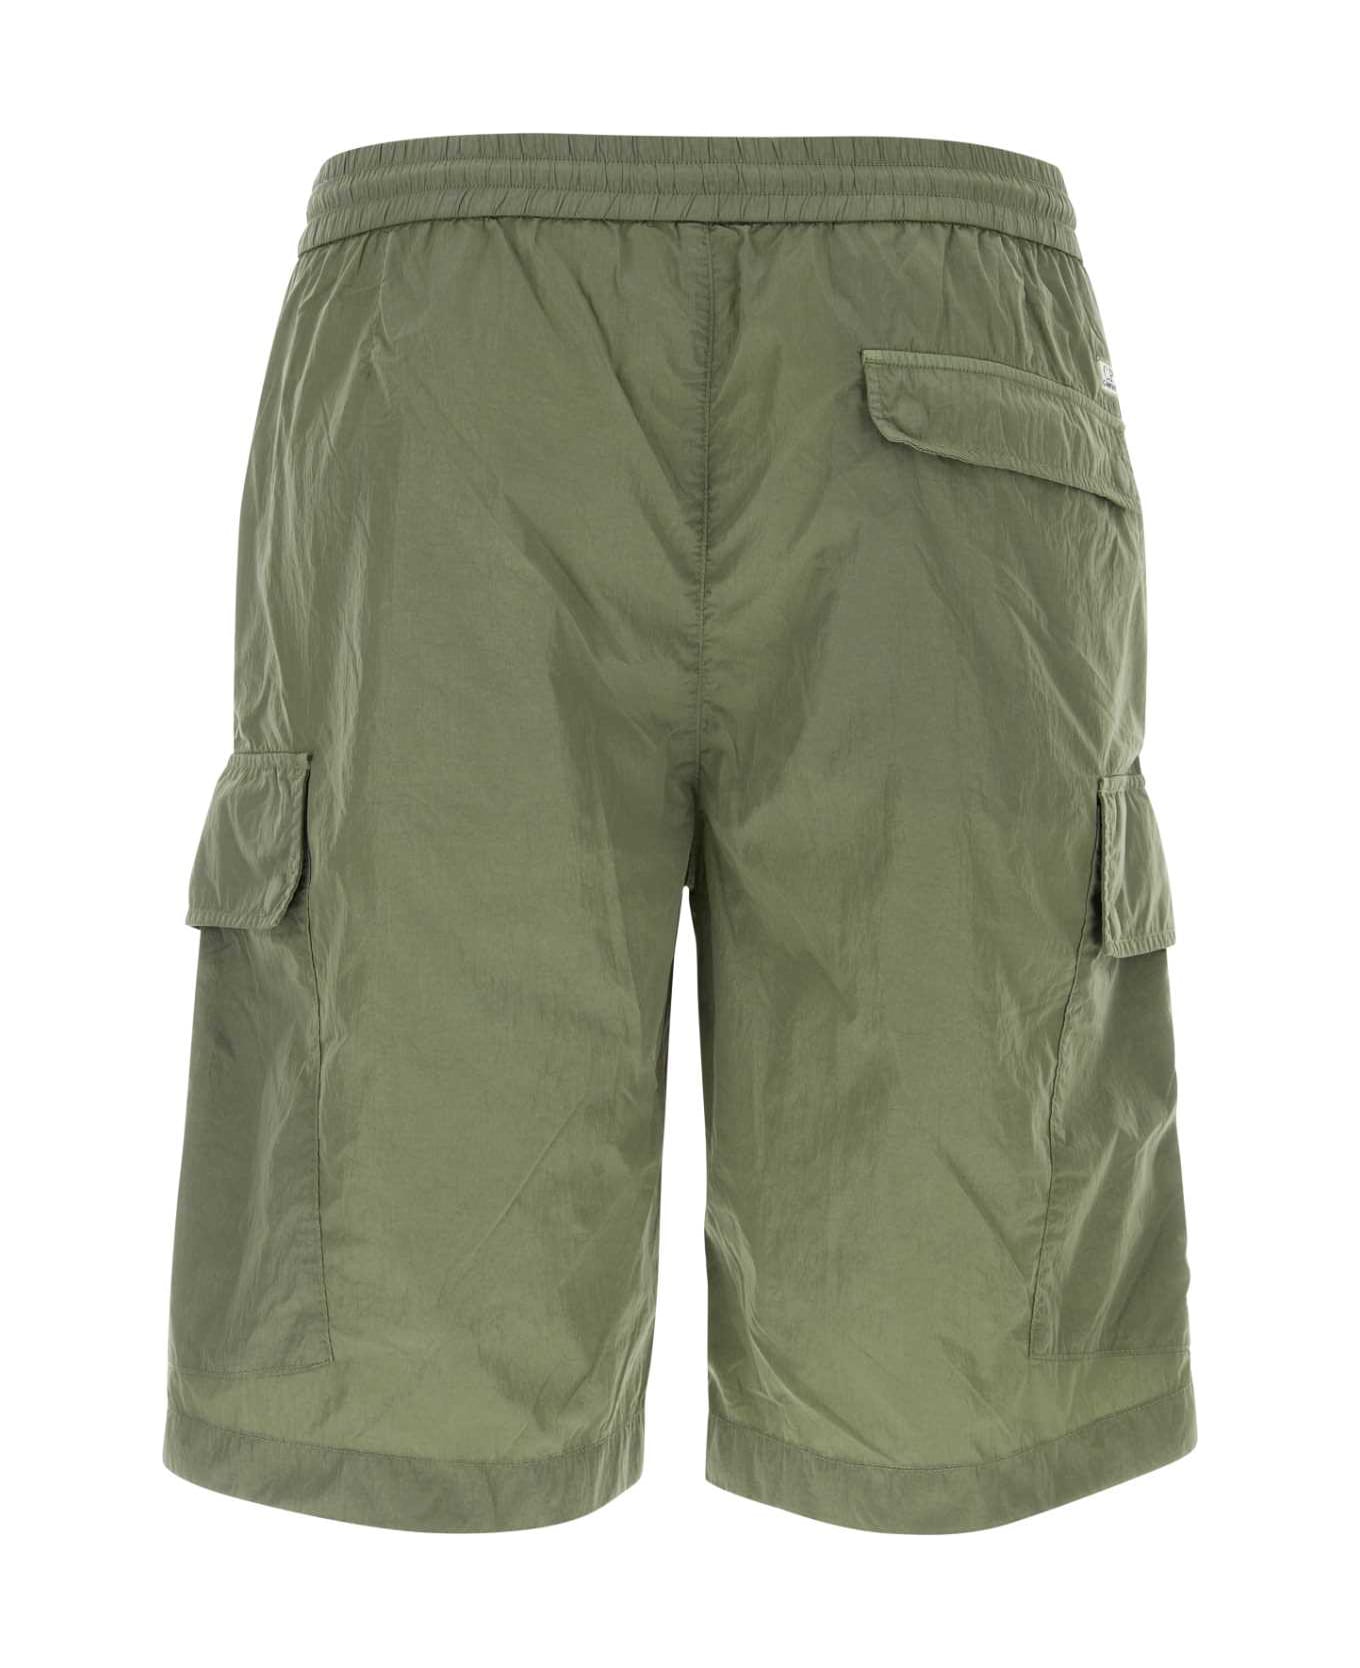 C.P. Company Sage Green Nylon Bermuda Shorts - AGAVEGREEN